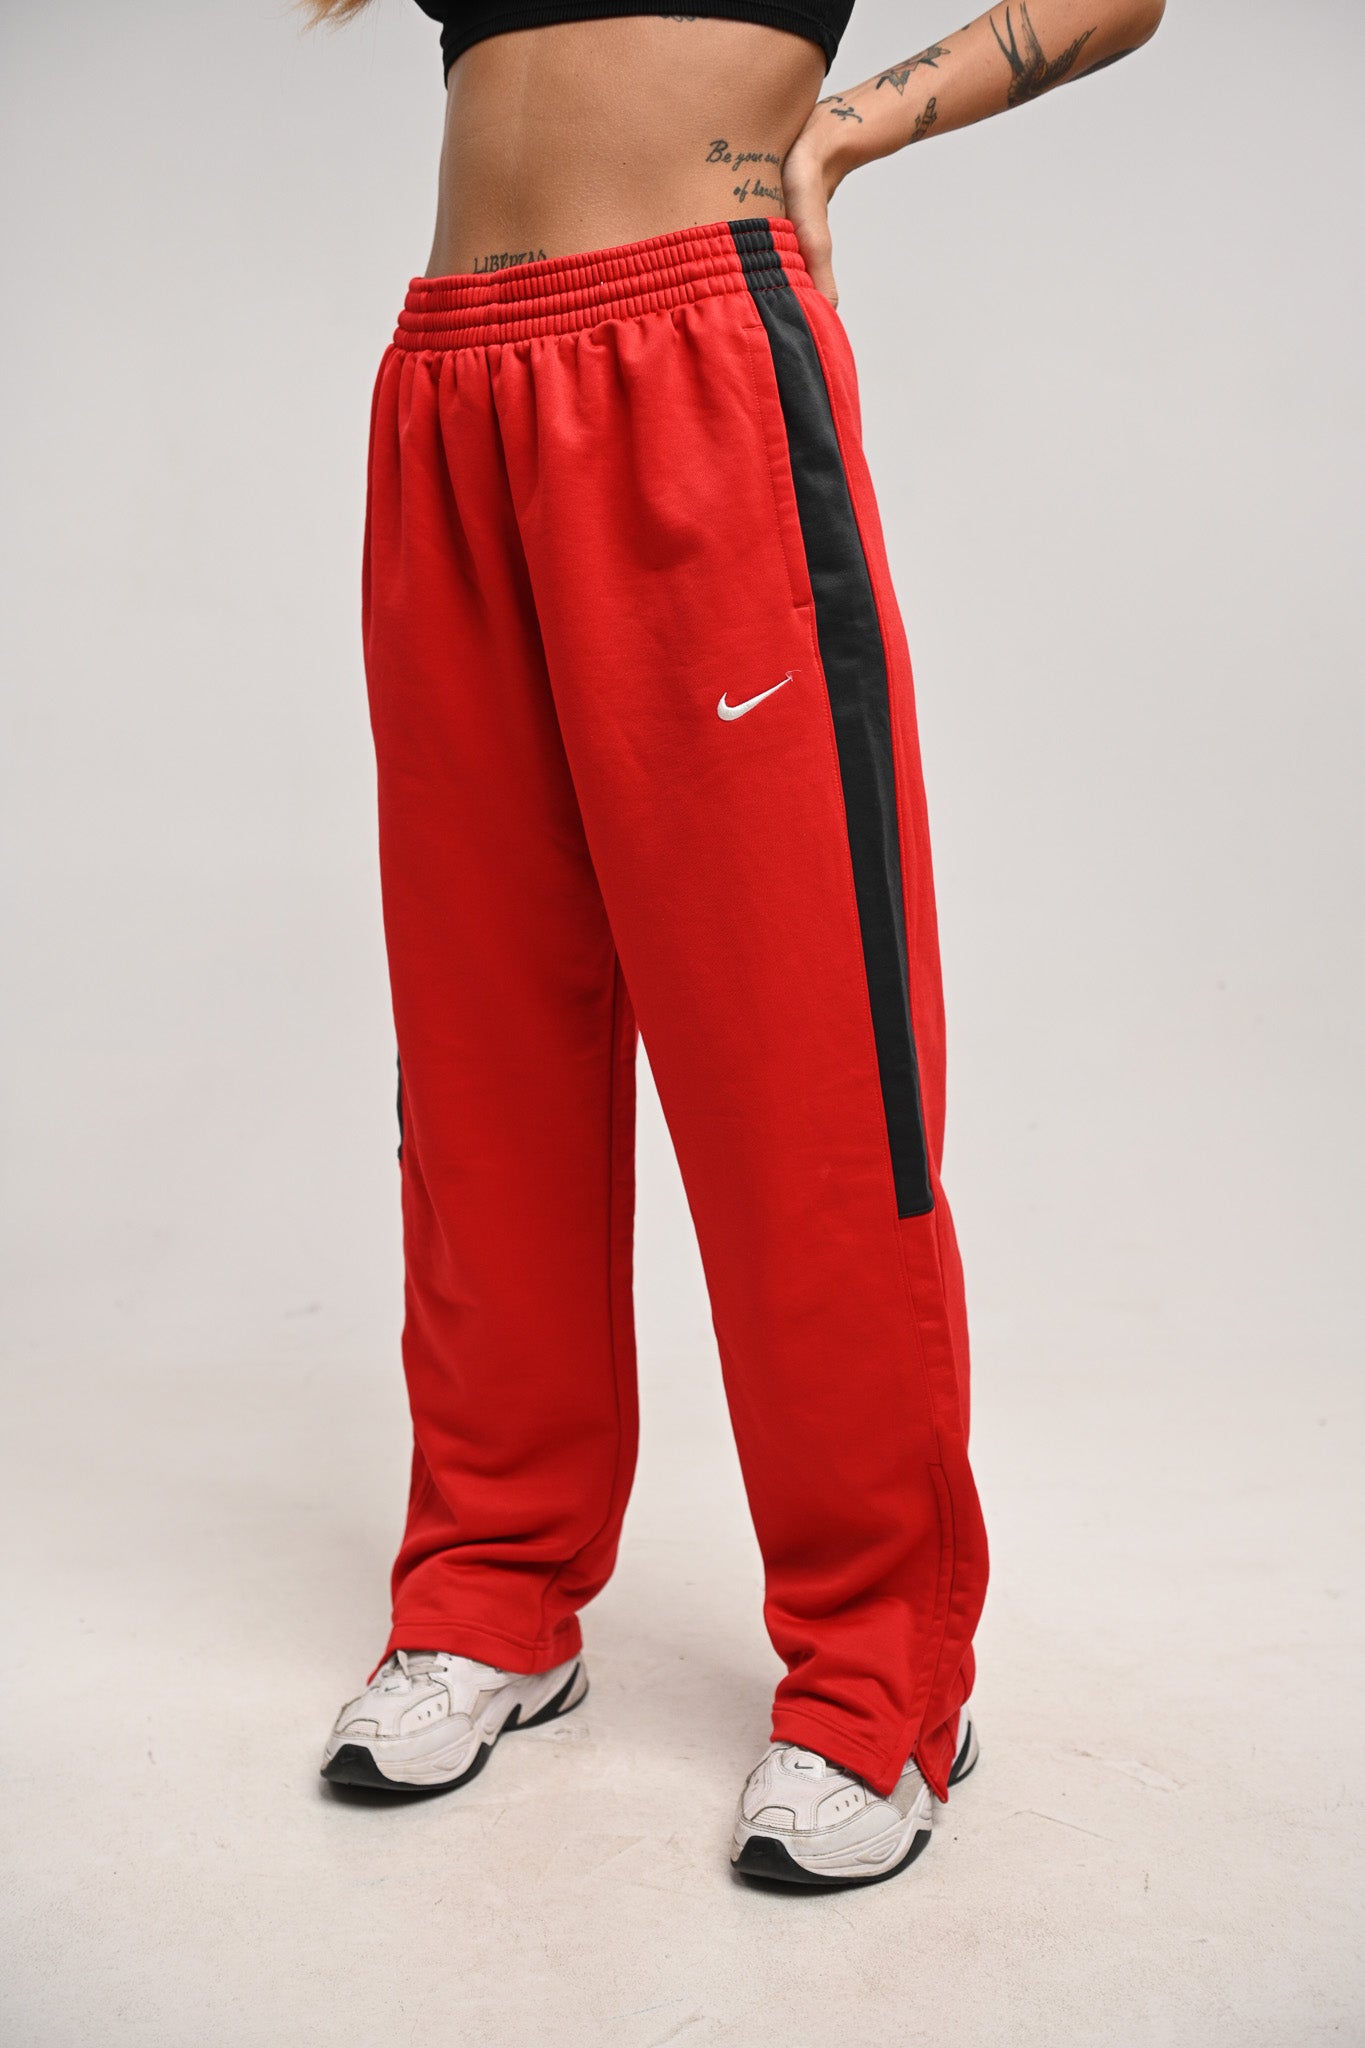 Nike track pants